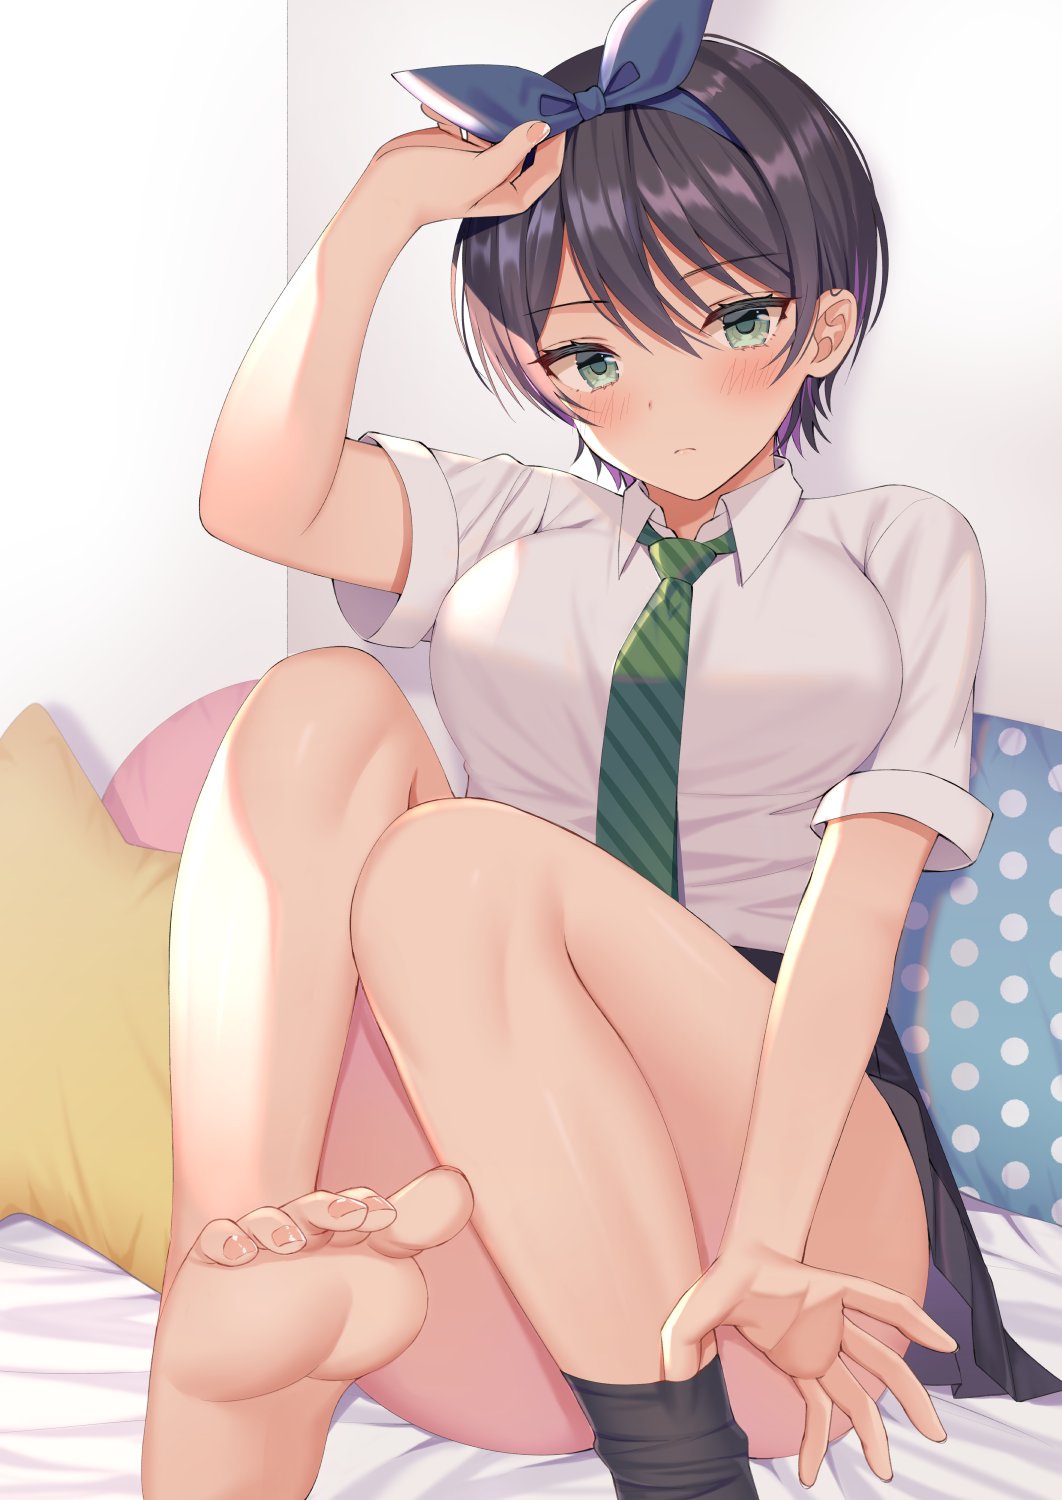 Anime Anime Girls Digital Art Artwork 2D Portrait Display Vertical In Bed School Uniform Missing Sto 1062x1500